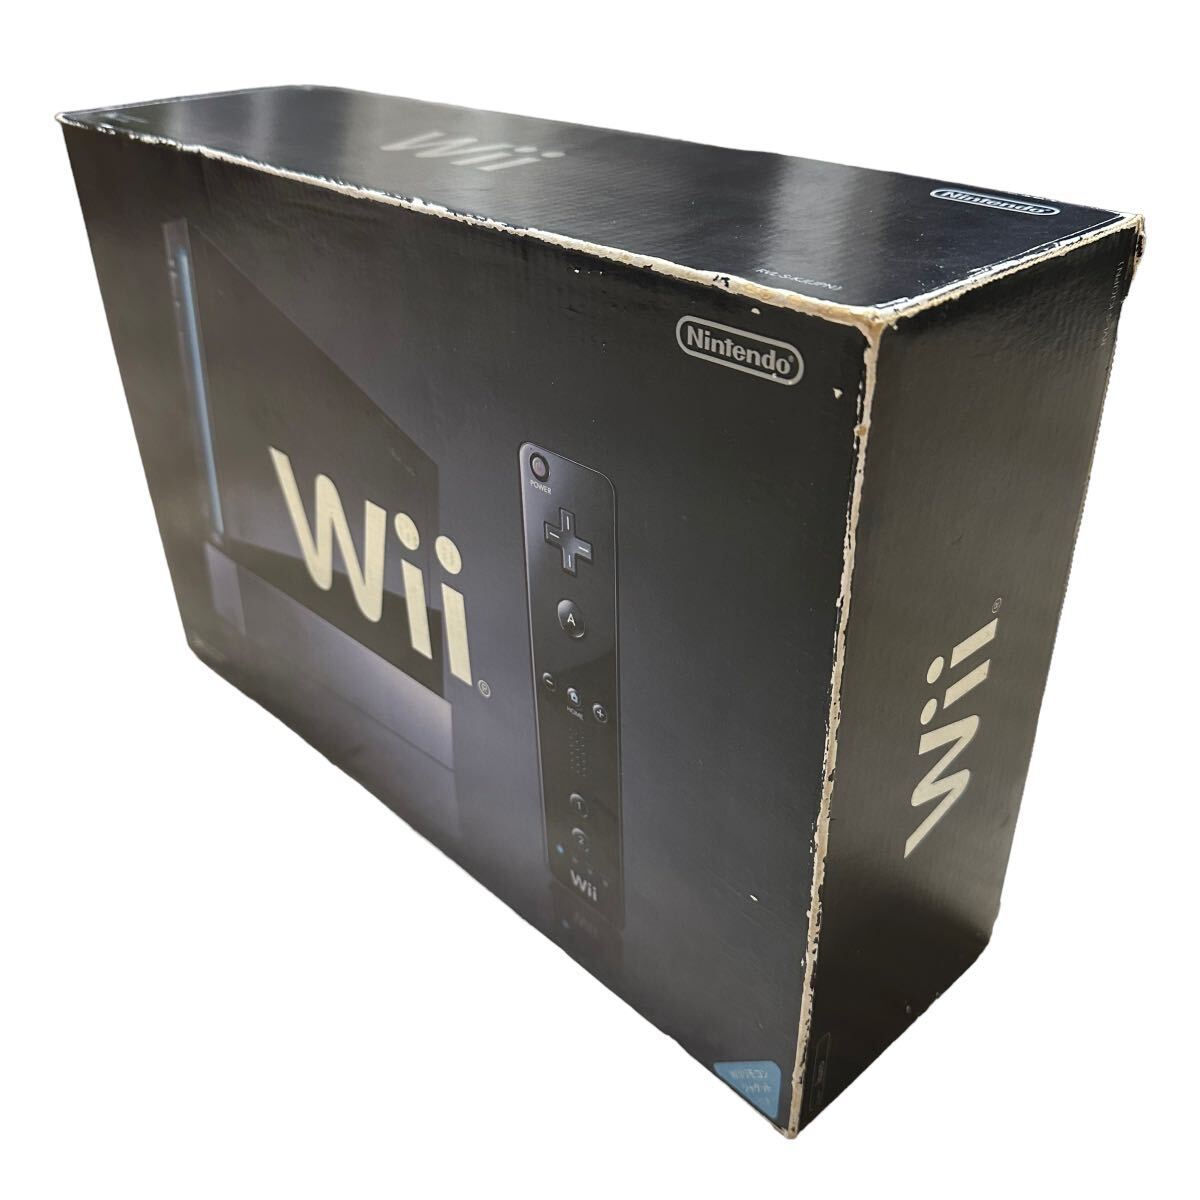  unused Wii nintendo Nintendo Nintendo white game machine 